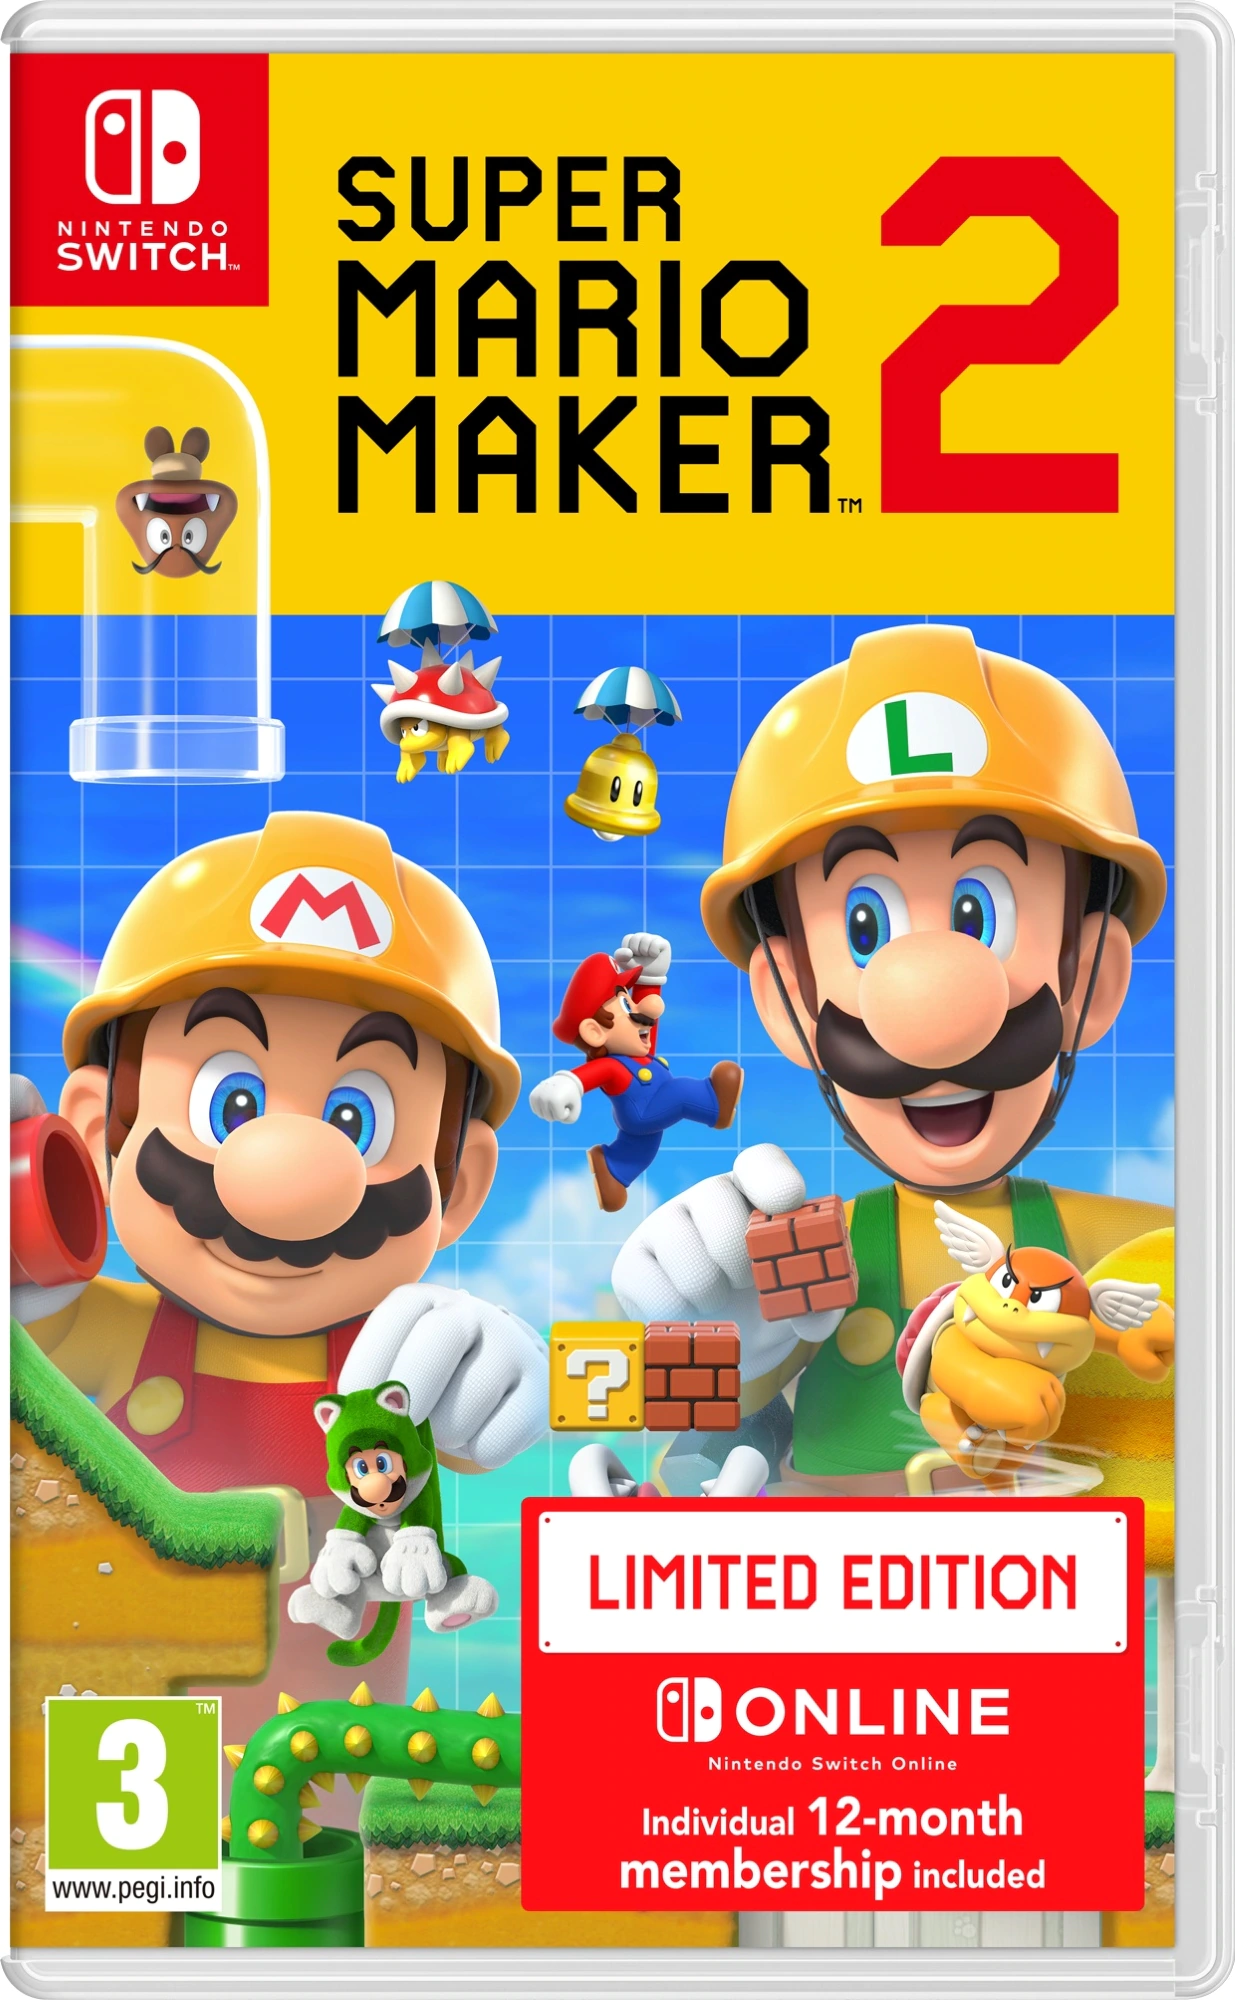 Super Mario Maker 2 Limited Edition (Nintendo Switch)Nintendo